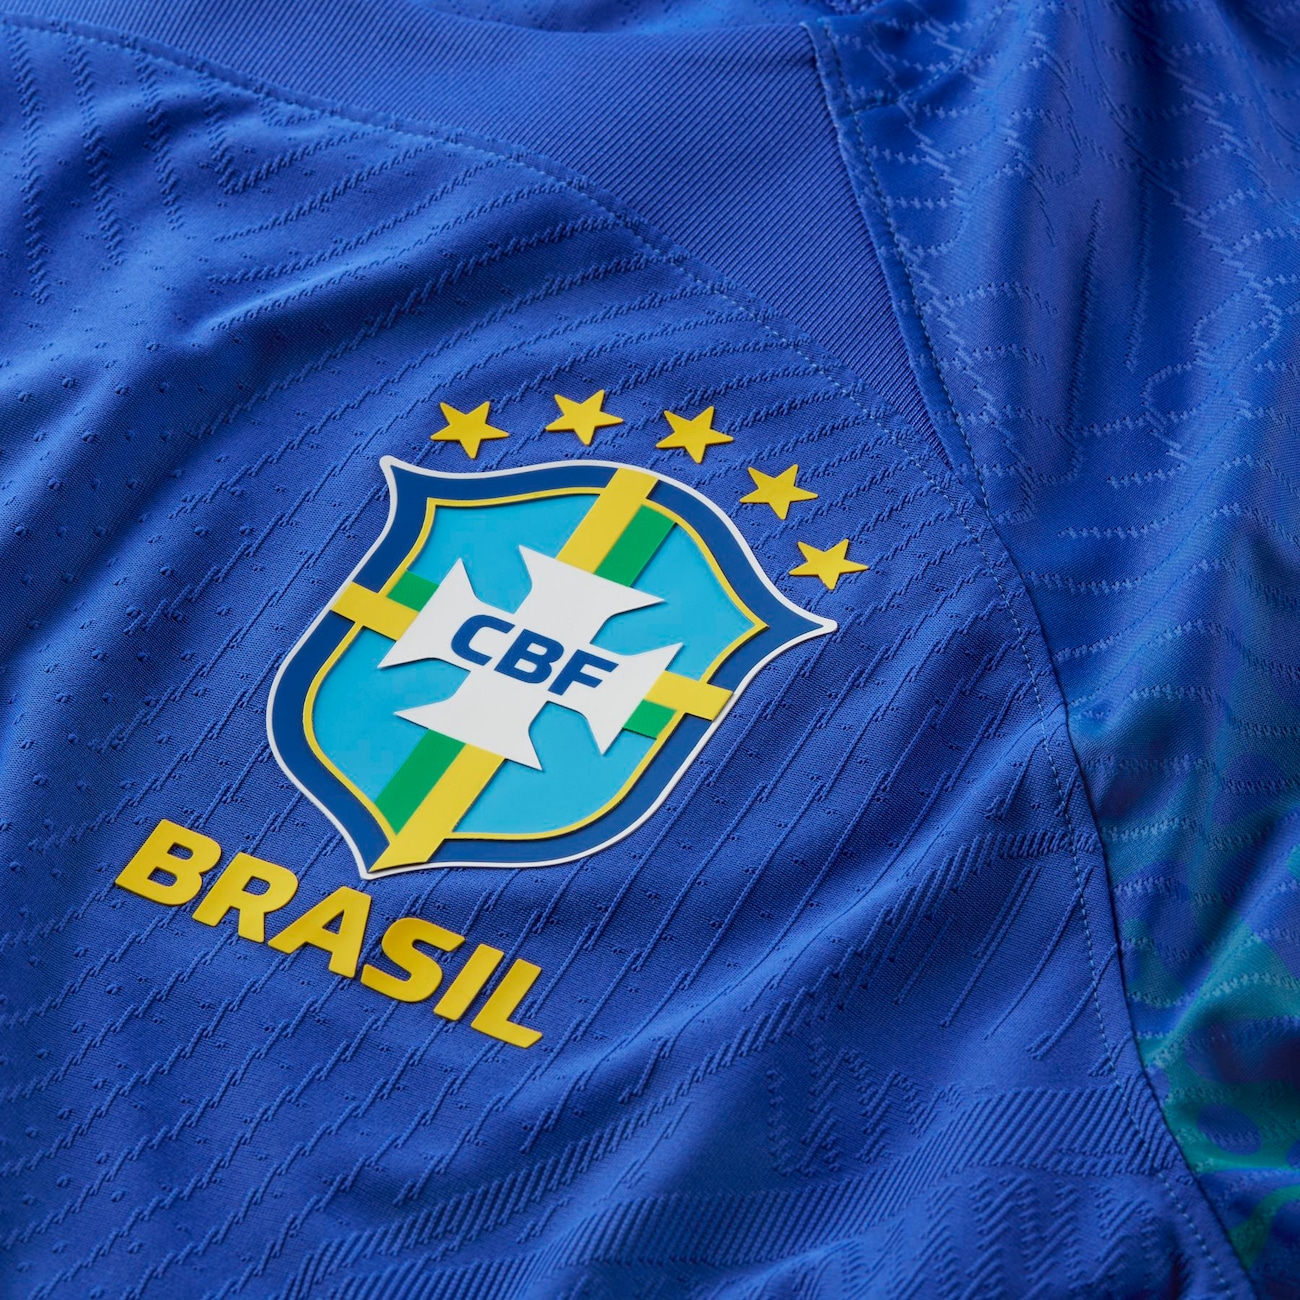 Camisa Brasil 2018 Nike Tam M - Roupas - Guará II, Brasília 1287577701